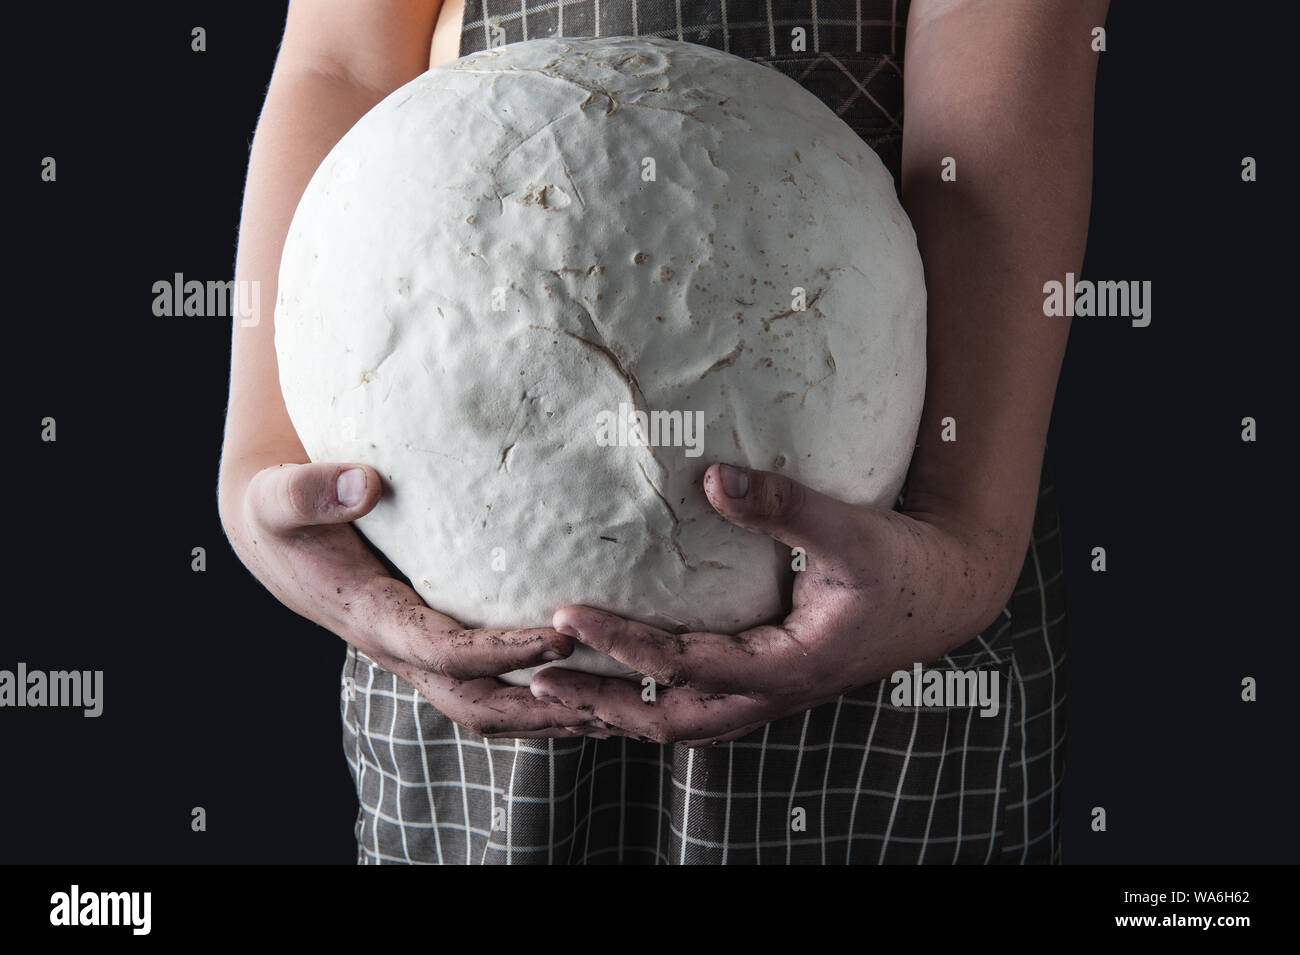 Giant white puffball mushroom on the hand farmer Stock Photo